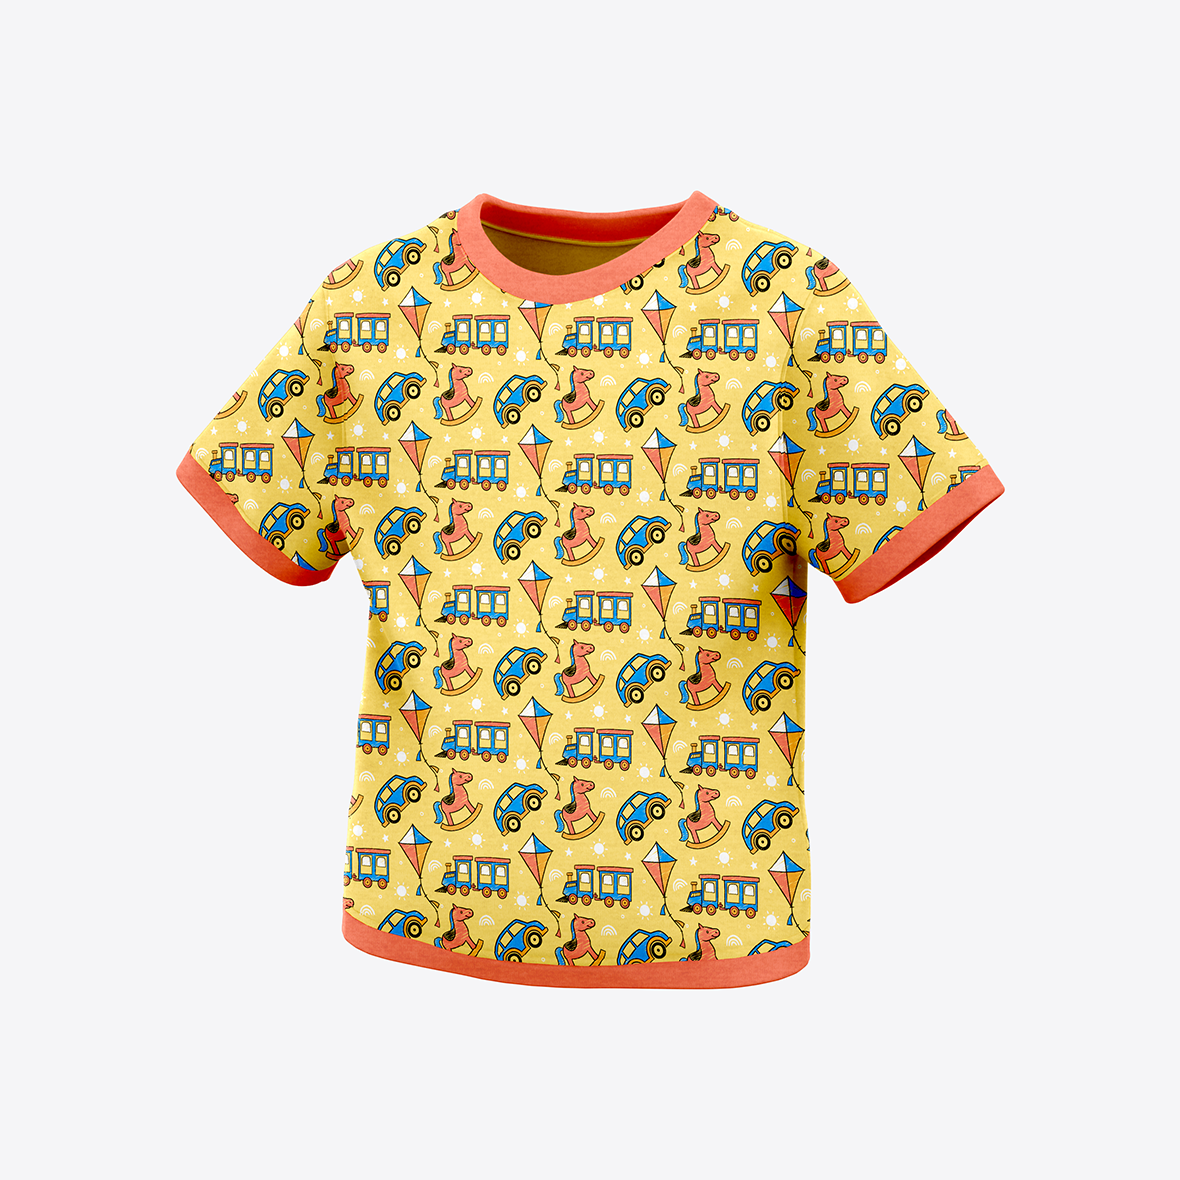 Kids T-shirt Mockup